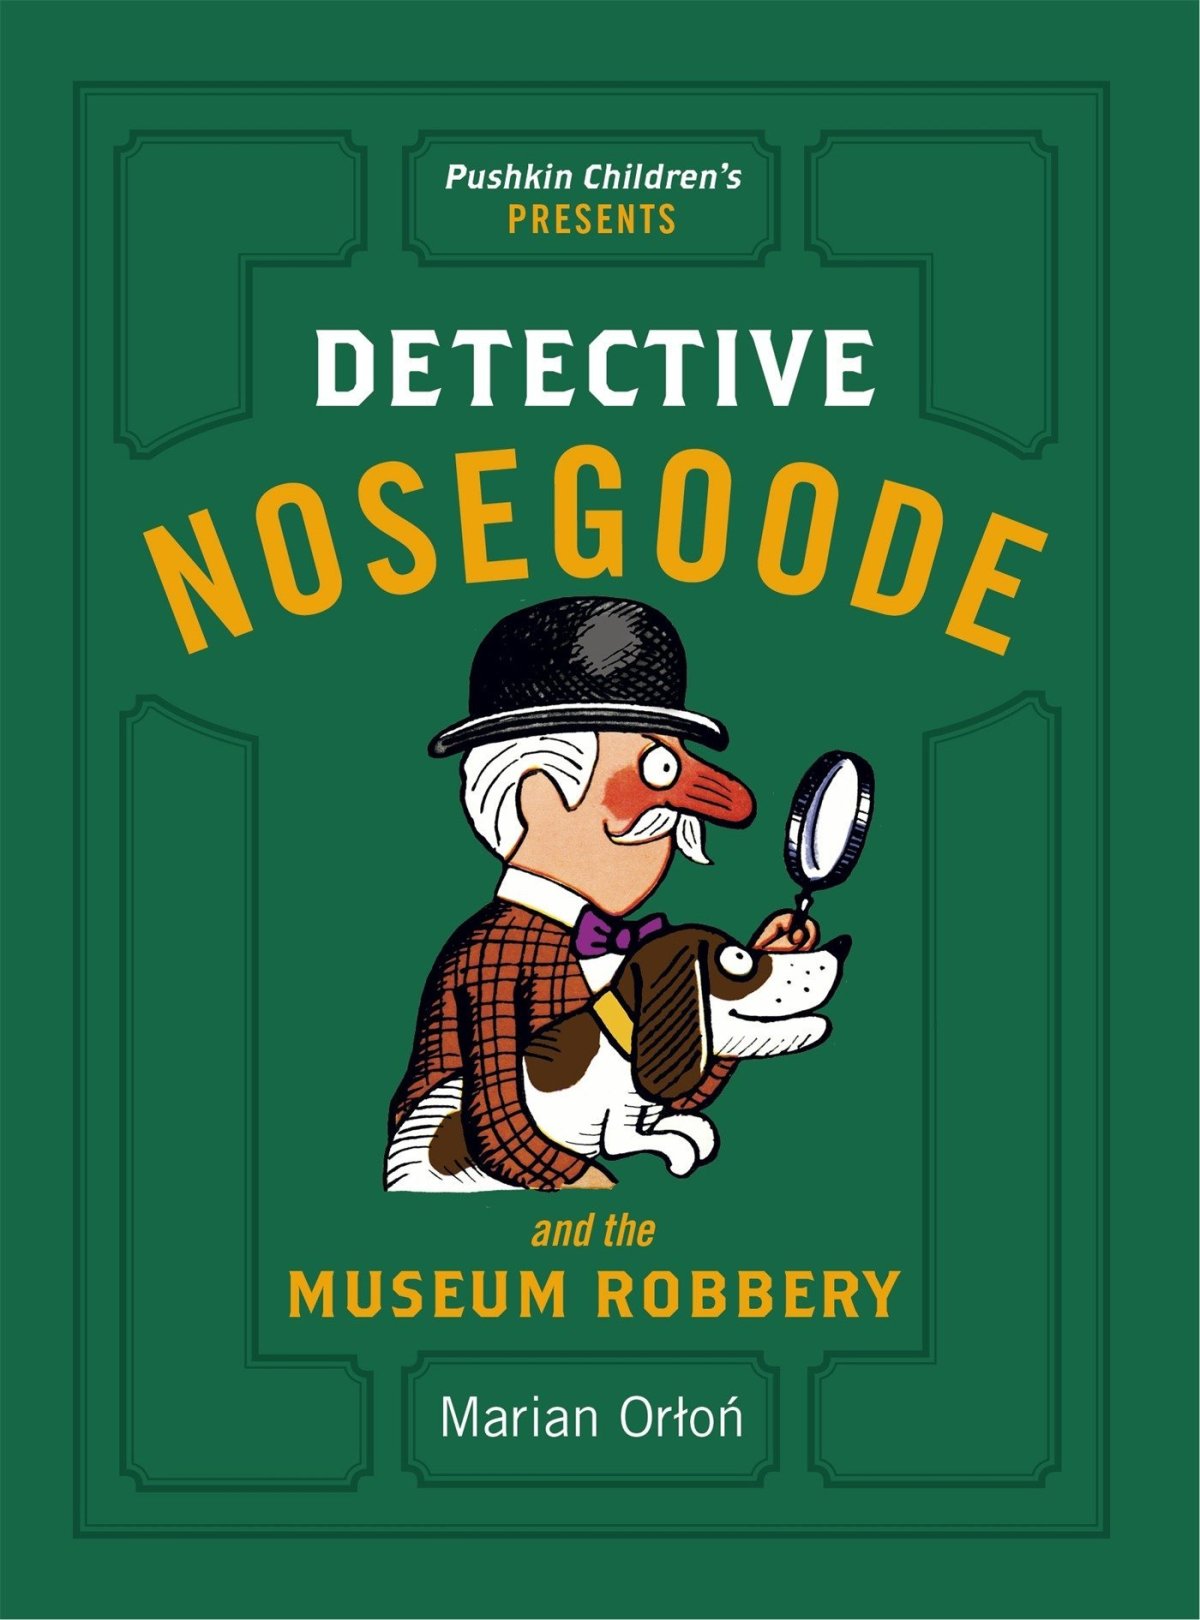 detective nosegood museum robbery